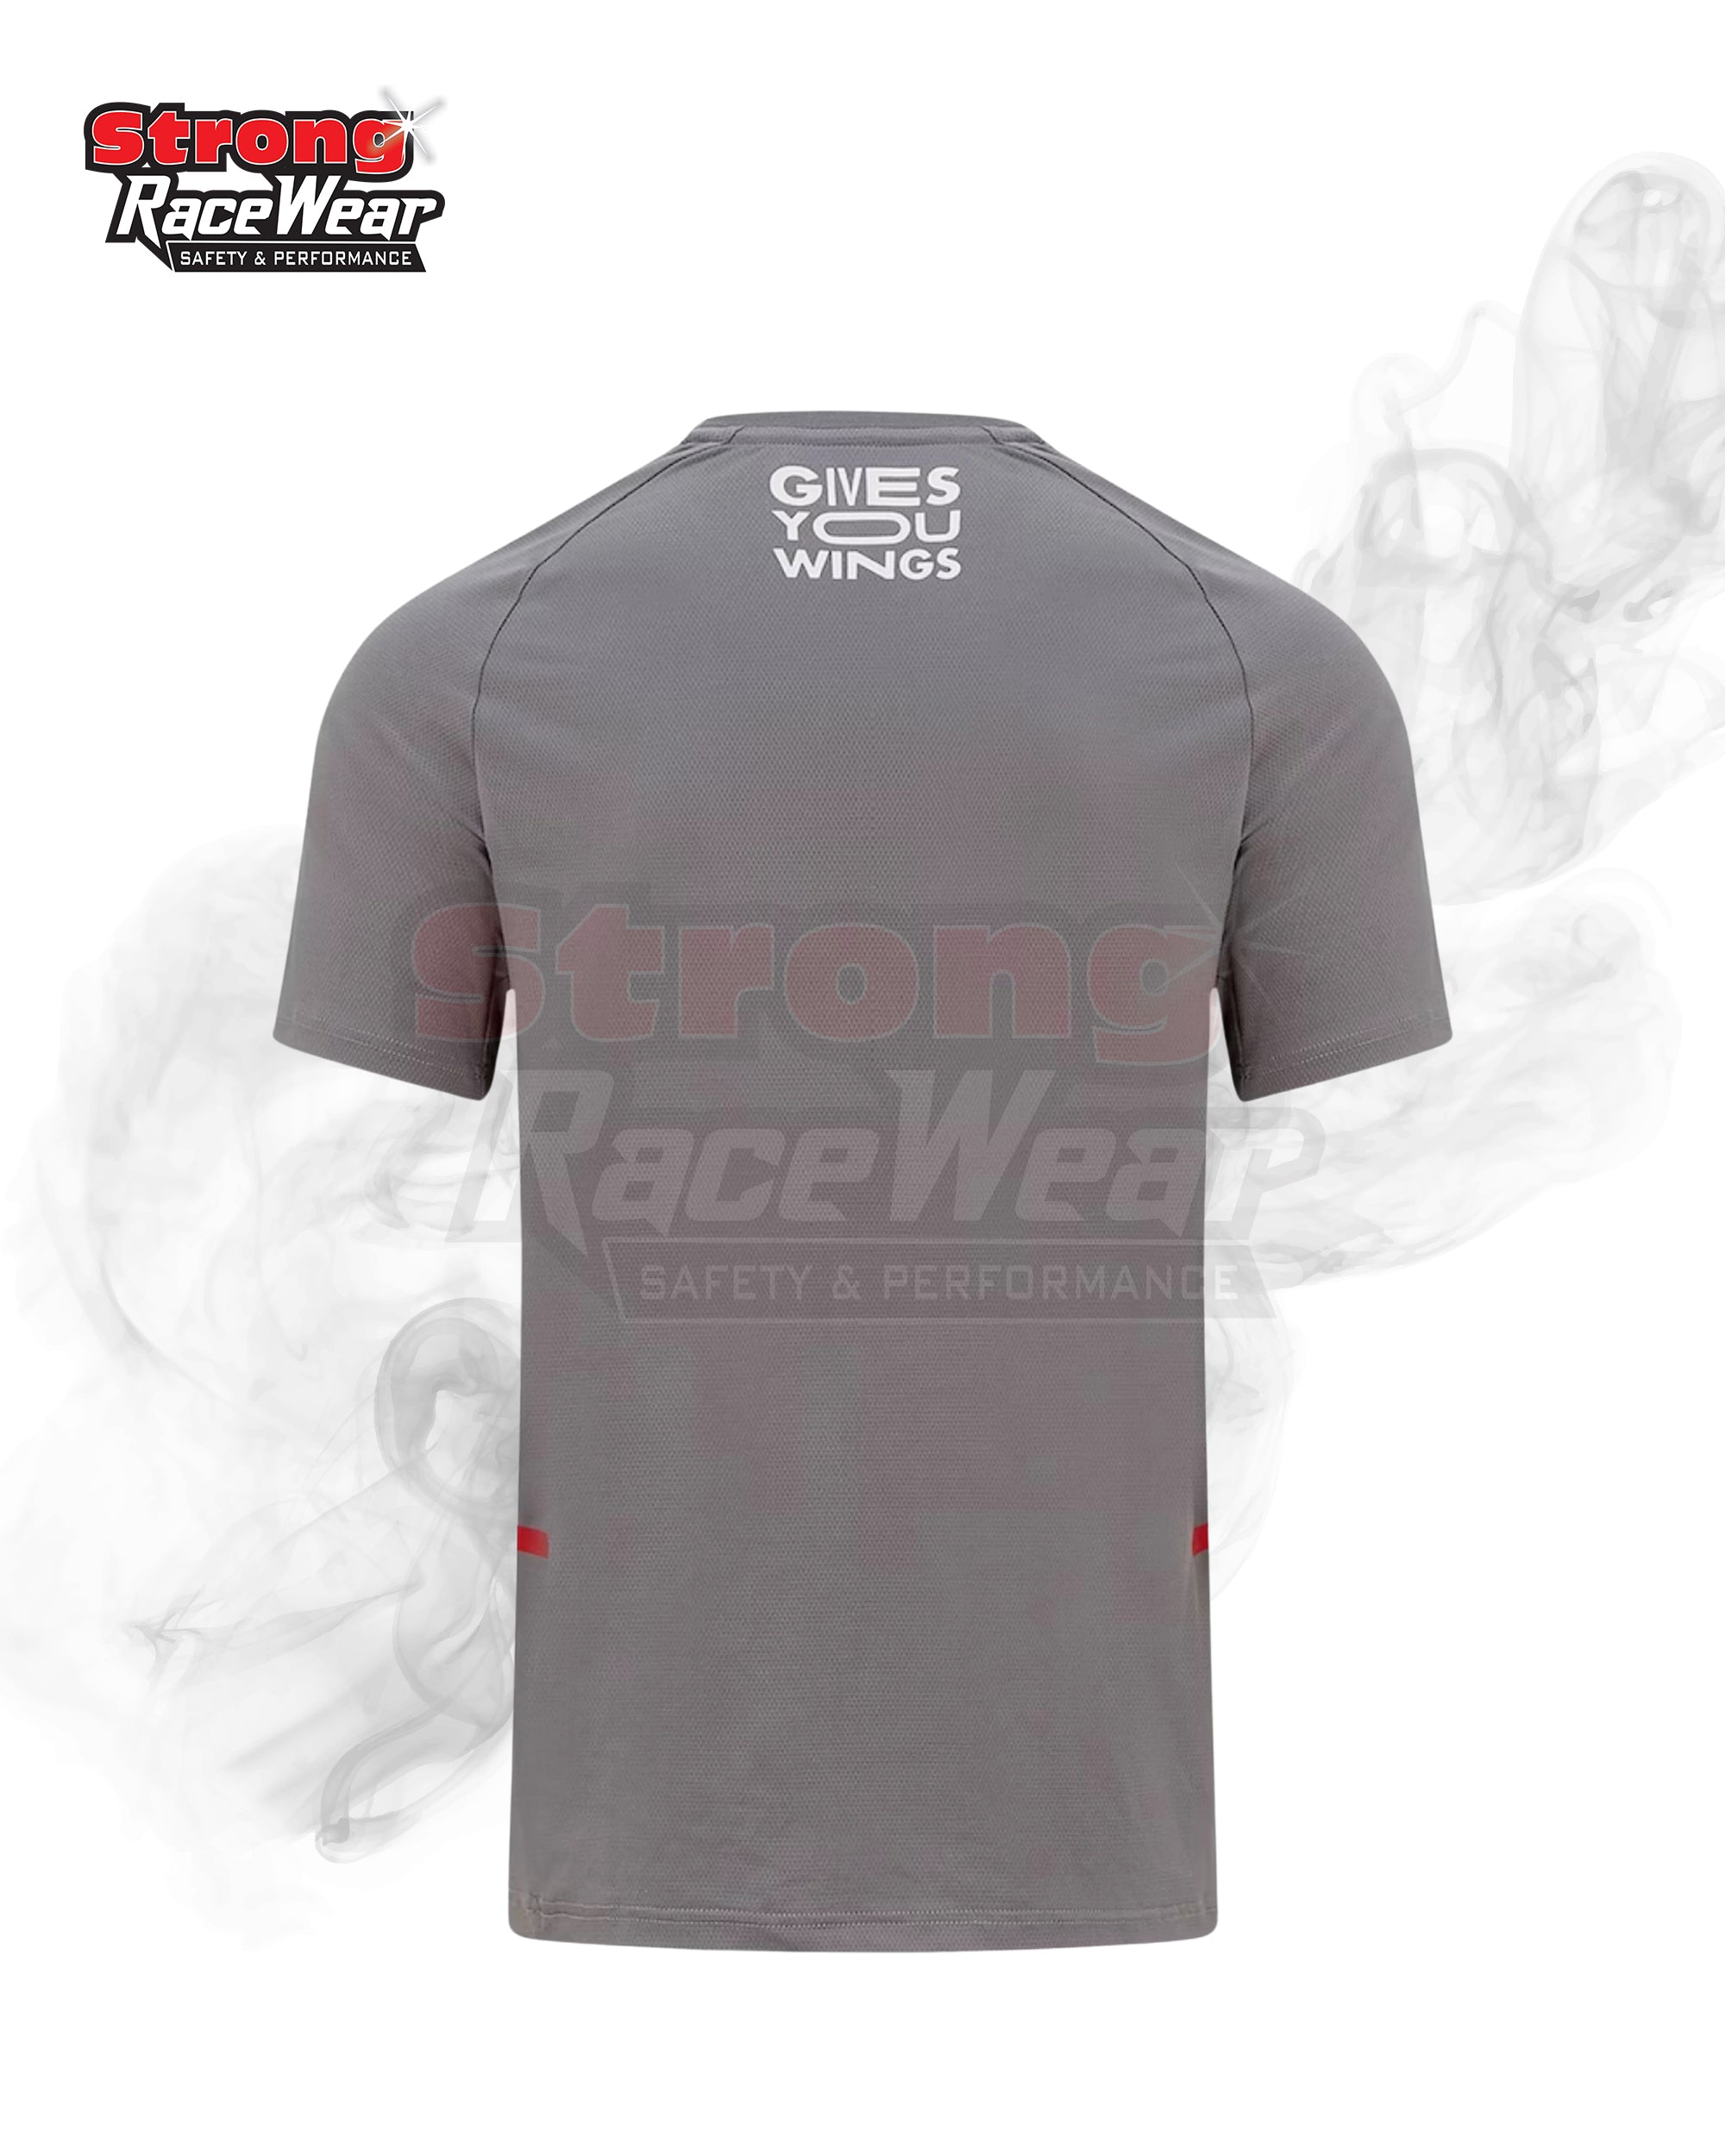 Oracle Red Bull Racing Tech T-Shirt